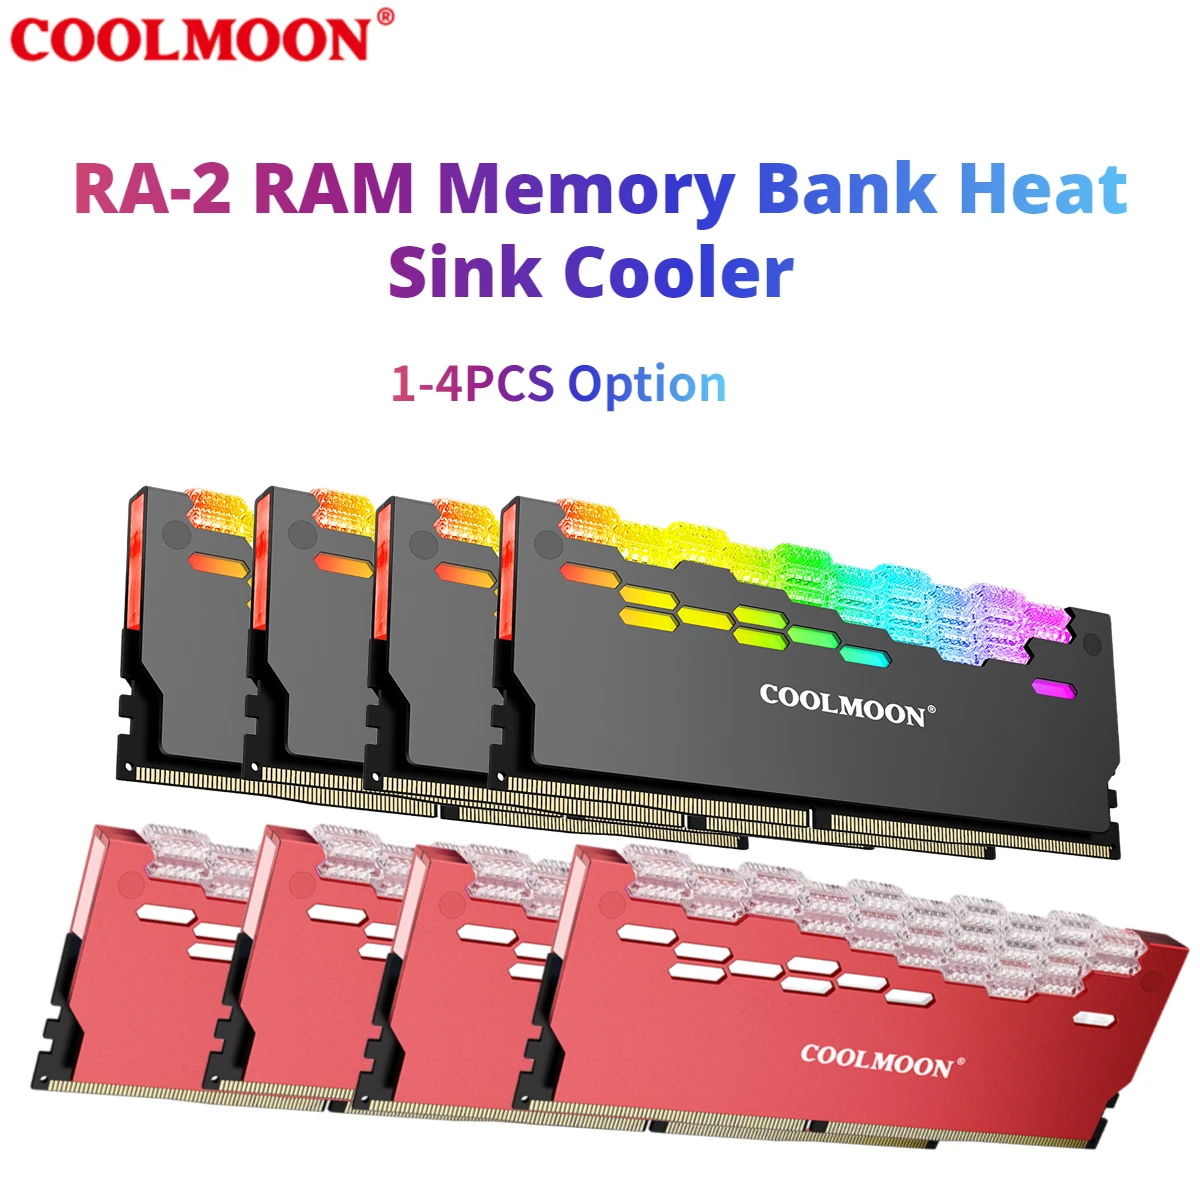 

COOLMOON RA-2 RAM Memory Bank Heat Sink Cooler ARGB Colorful Flashing Heat Spreader For PC Desktop Computer Accessories